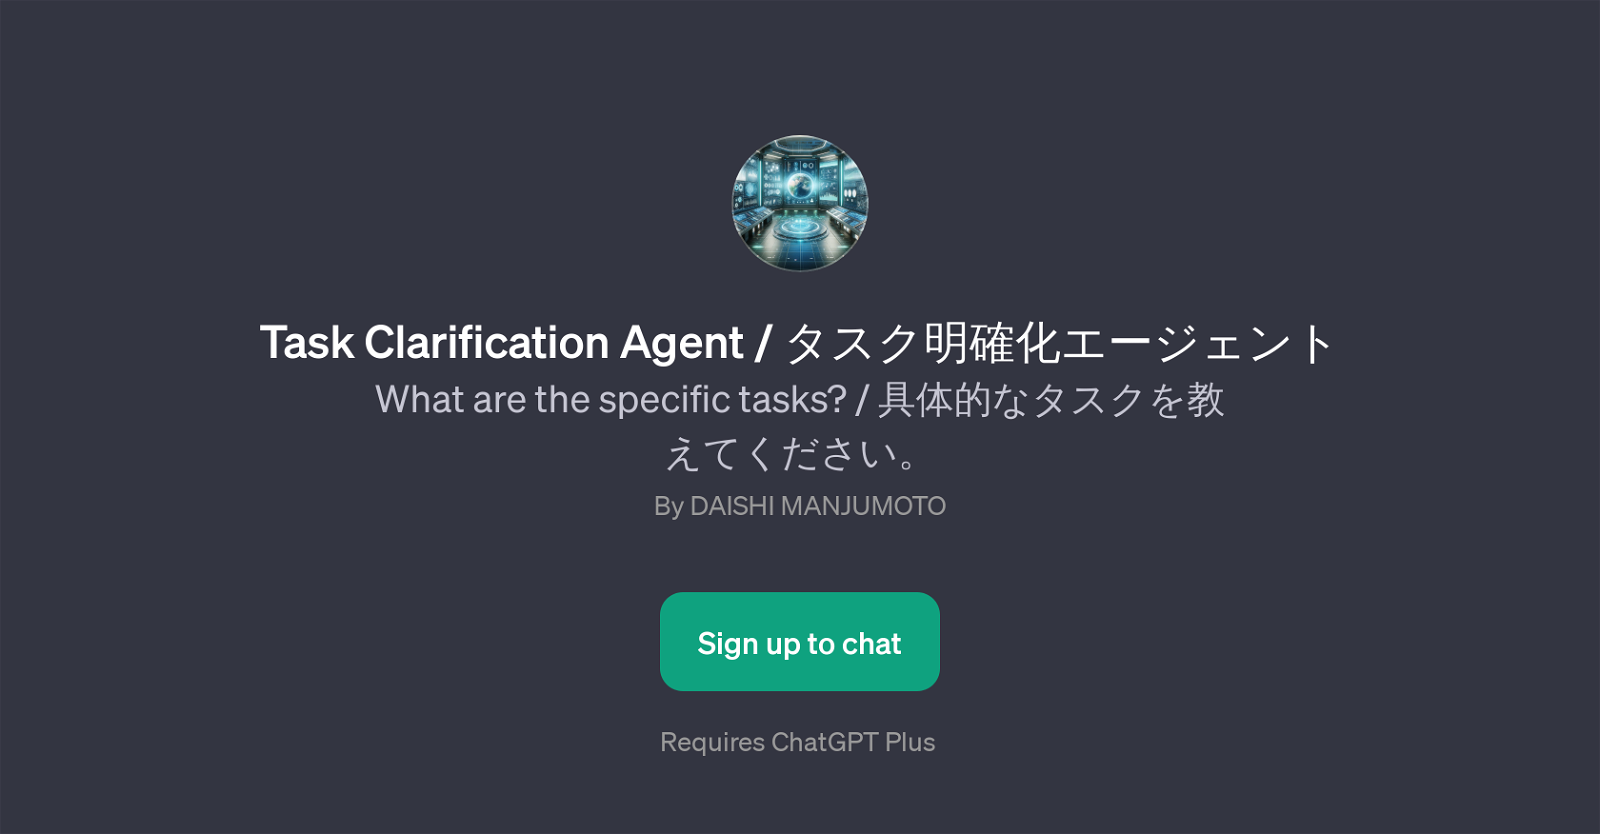 Task Clarification Agent website